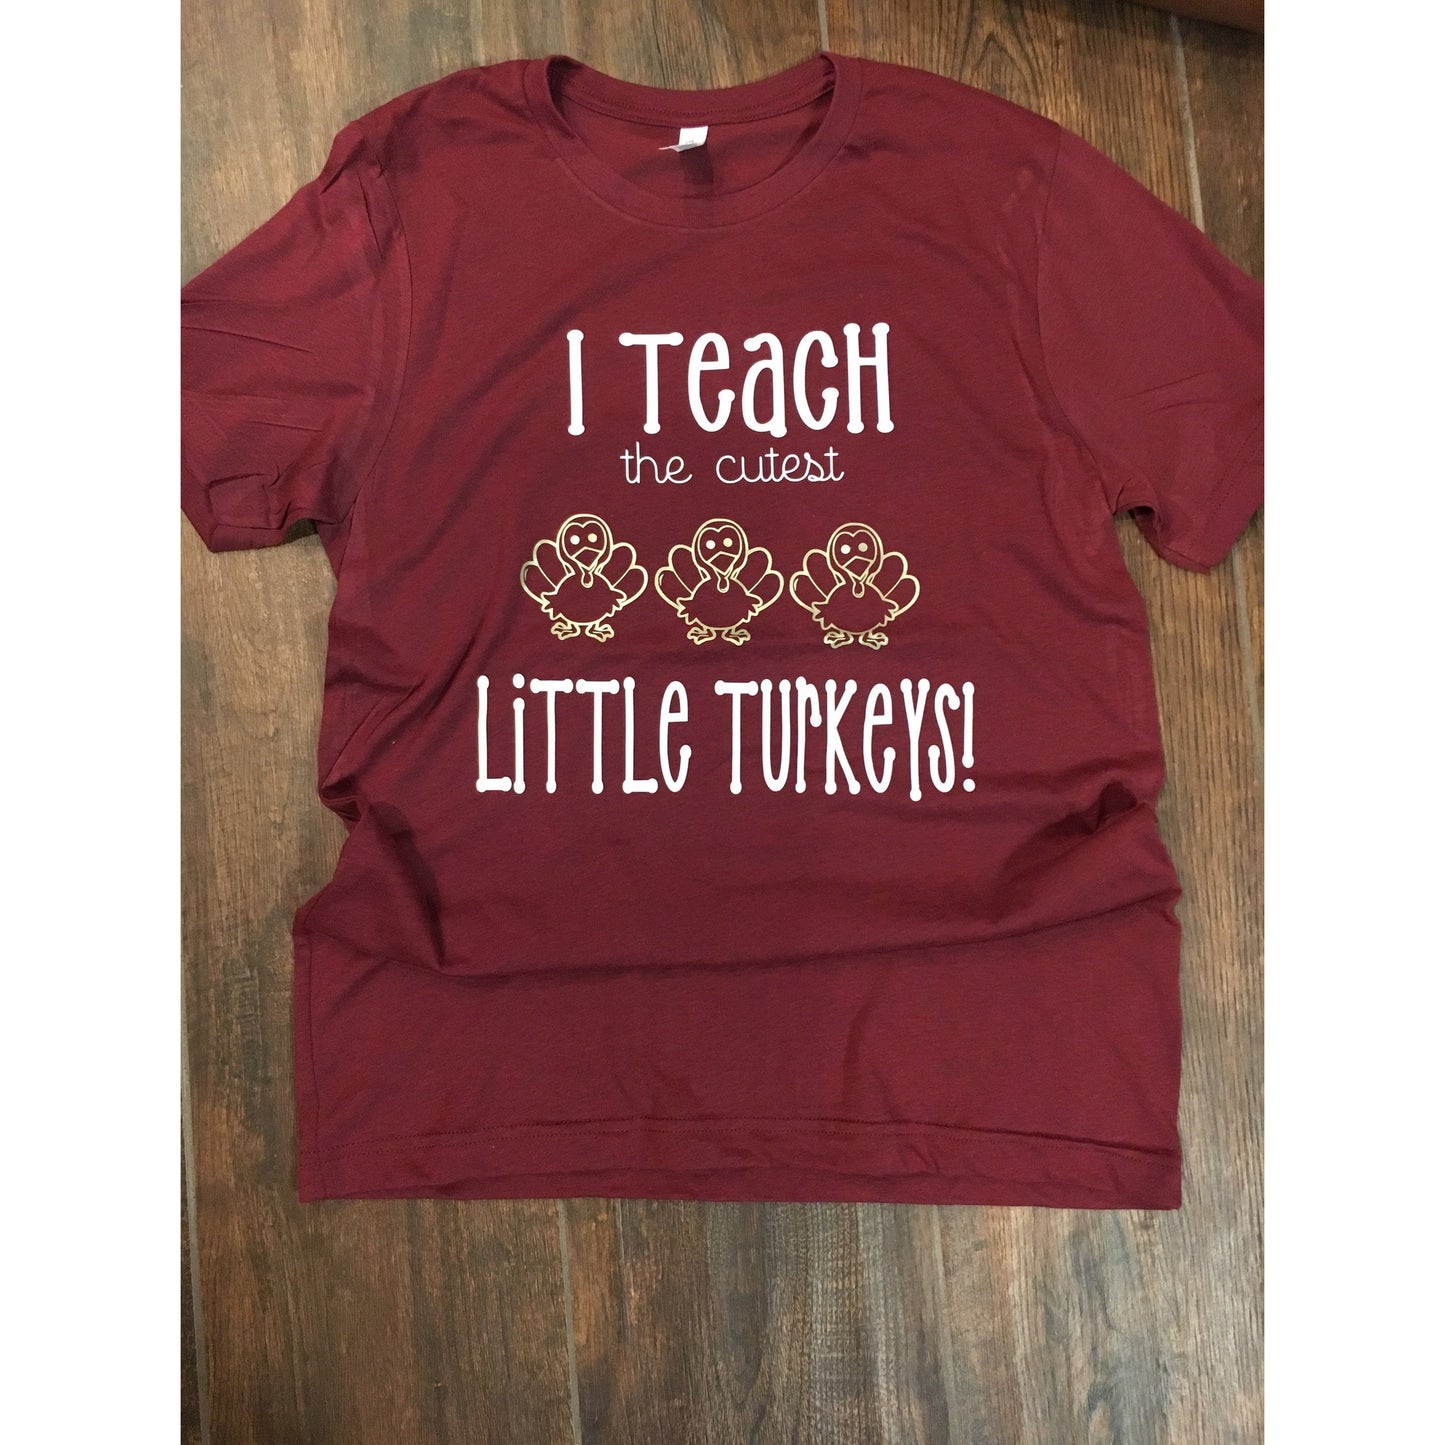 Teach Cutest Turkeys